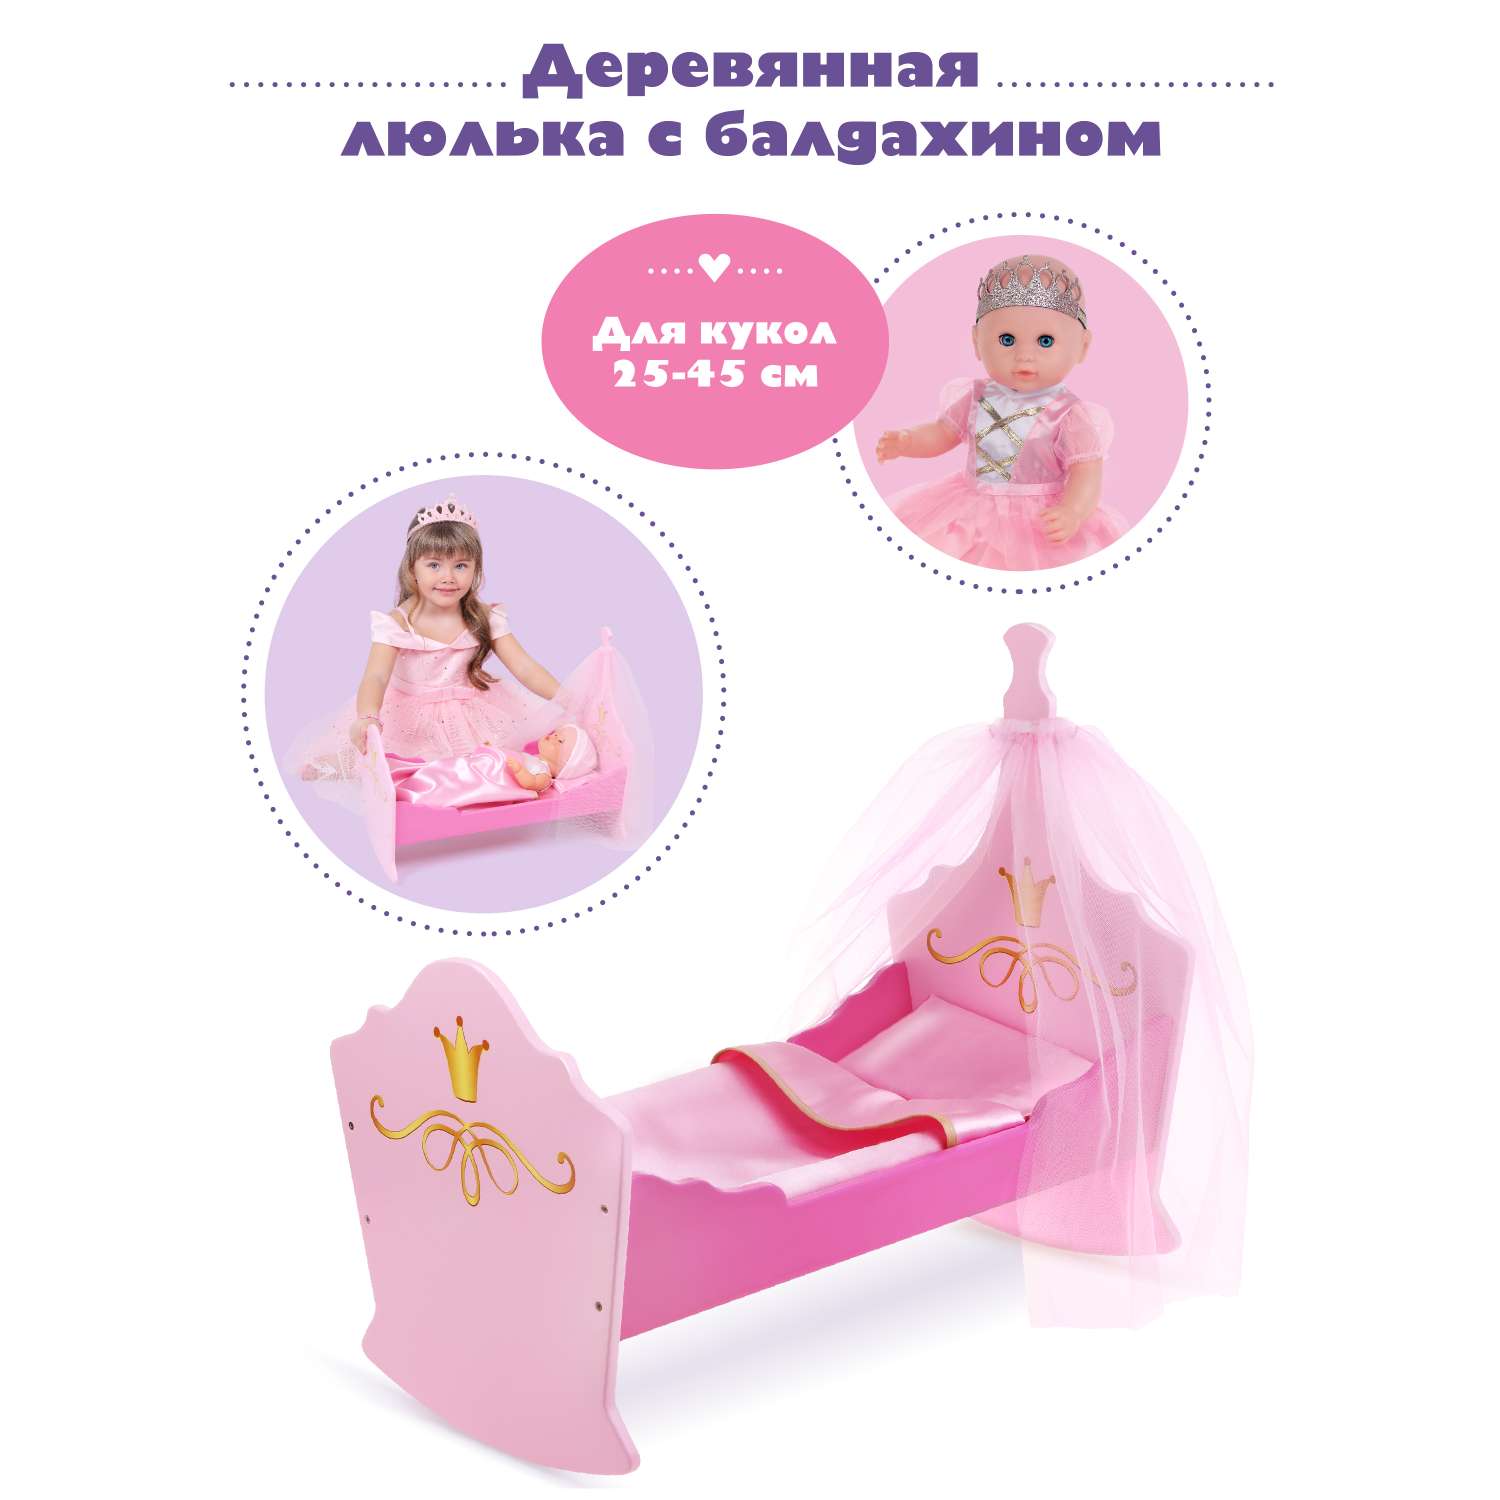 Кроватка-люлька Mary Poppins с балдахином кукольная мебель для куклы пупса кукол. Принцесса 67415 - фото 2